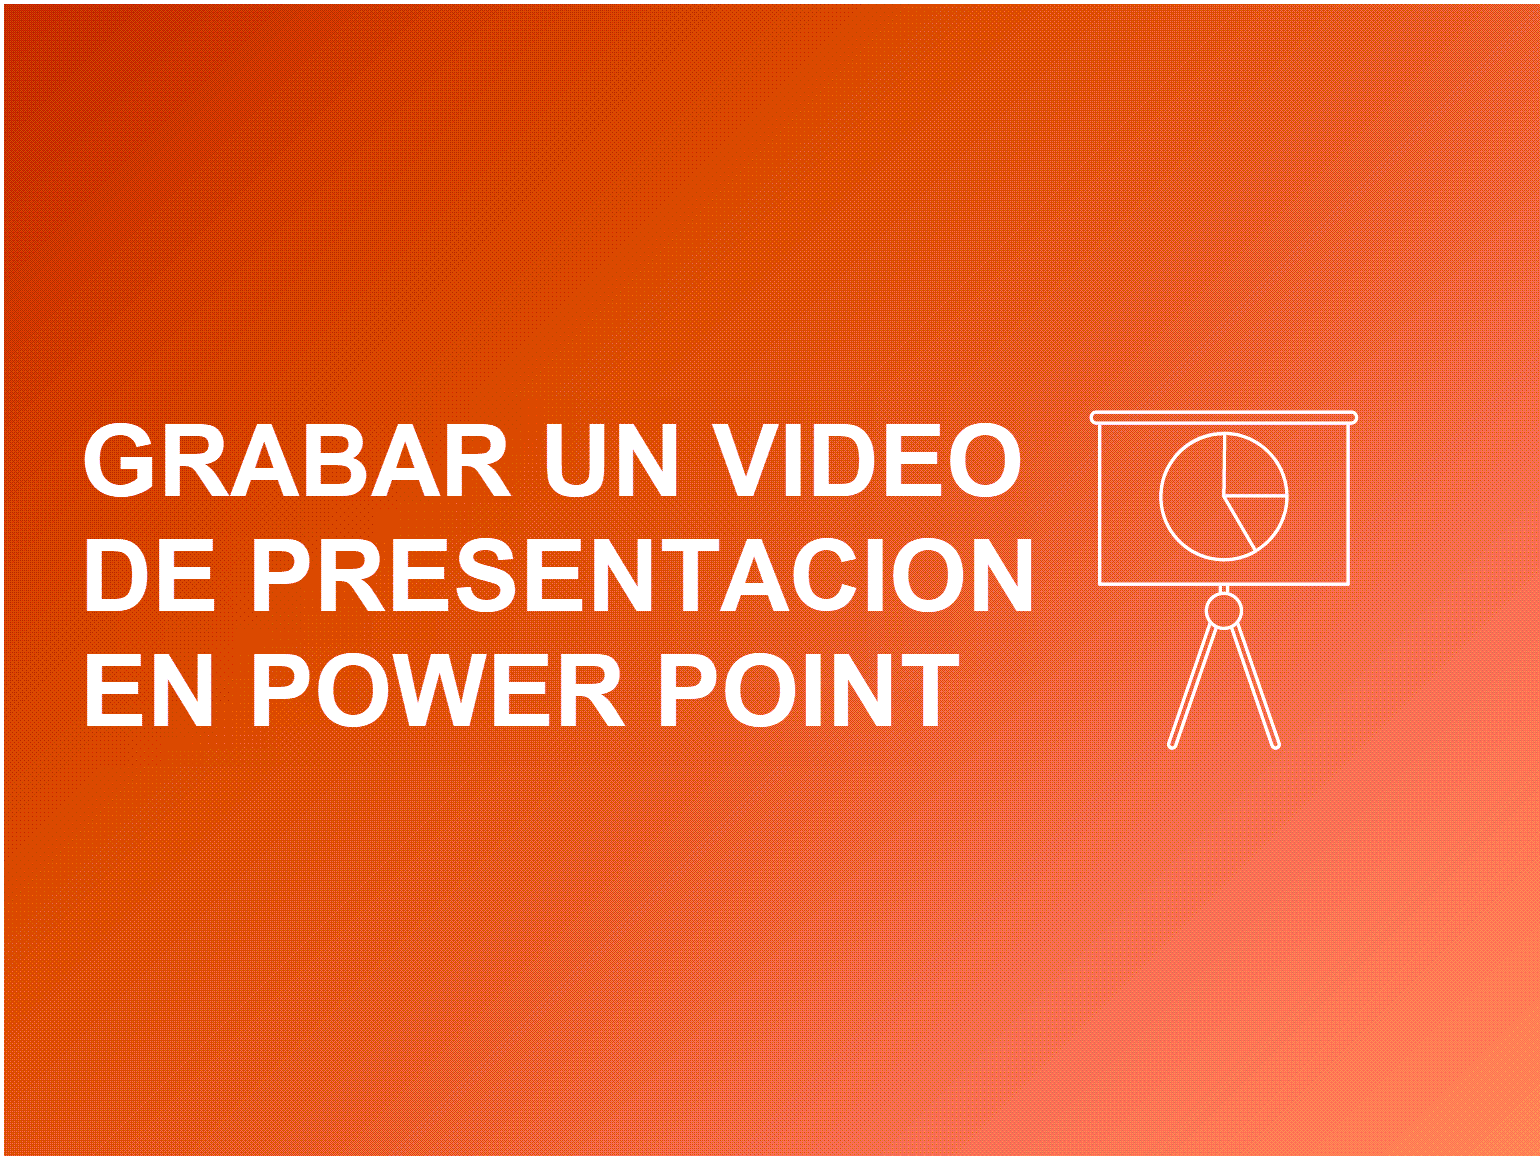 Como Grabar un Video de tu Presentacion en Power Point?